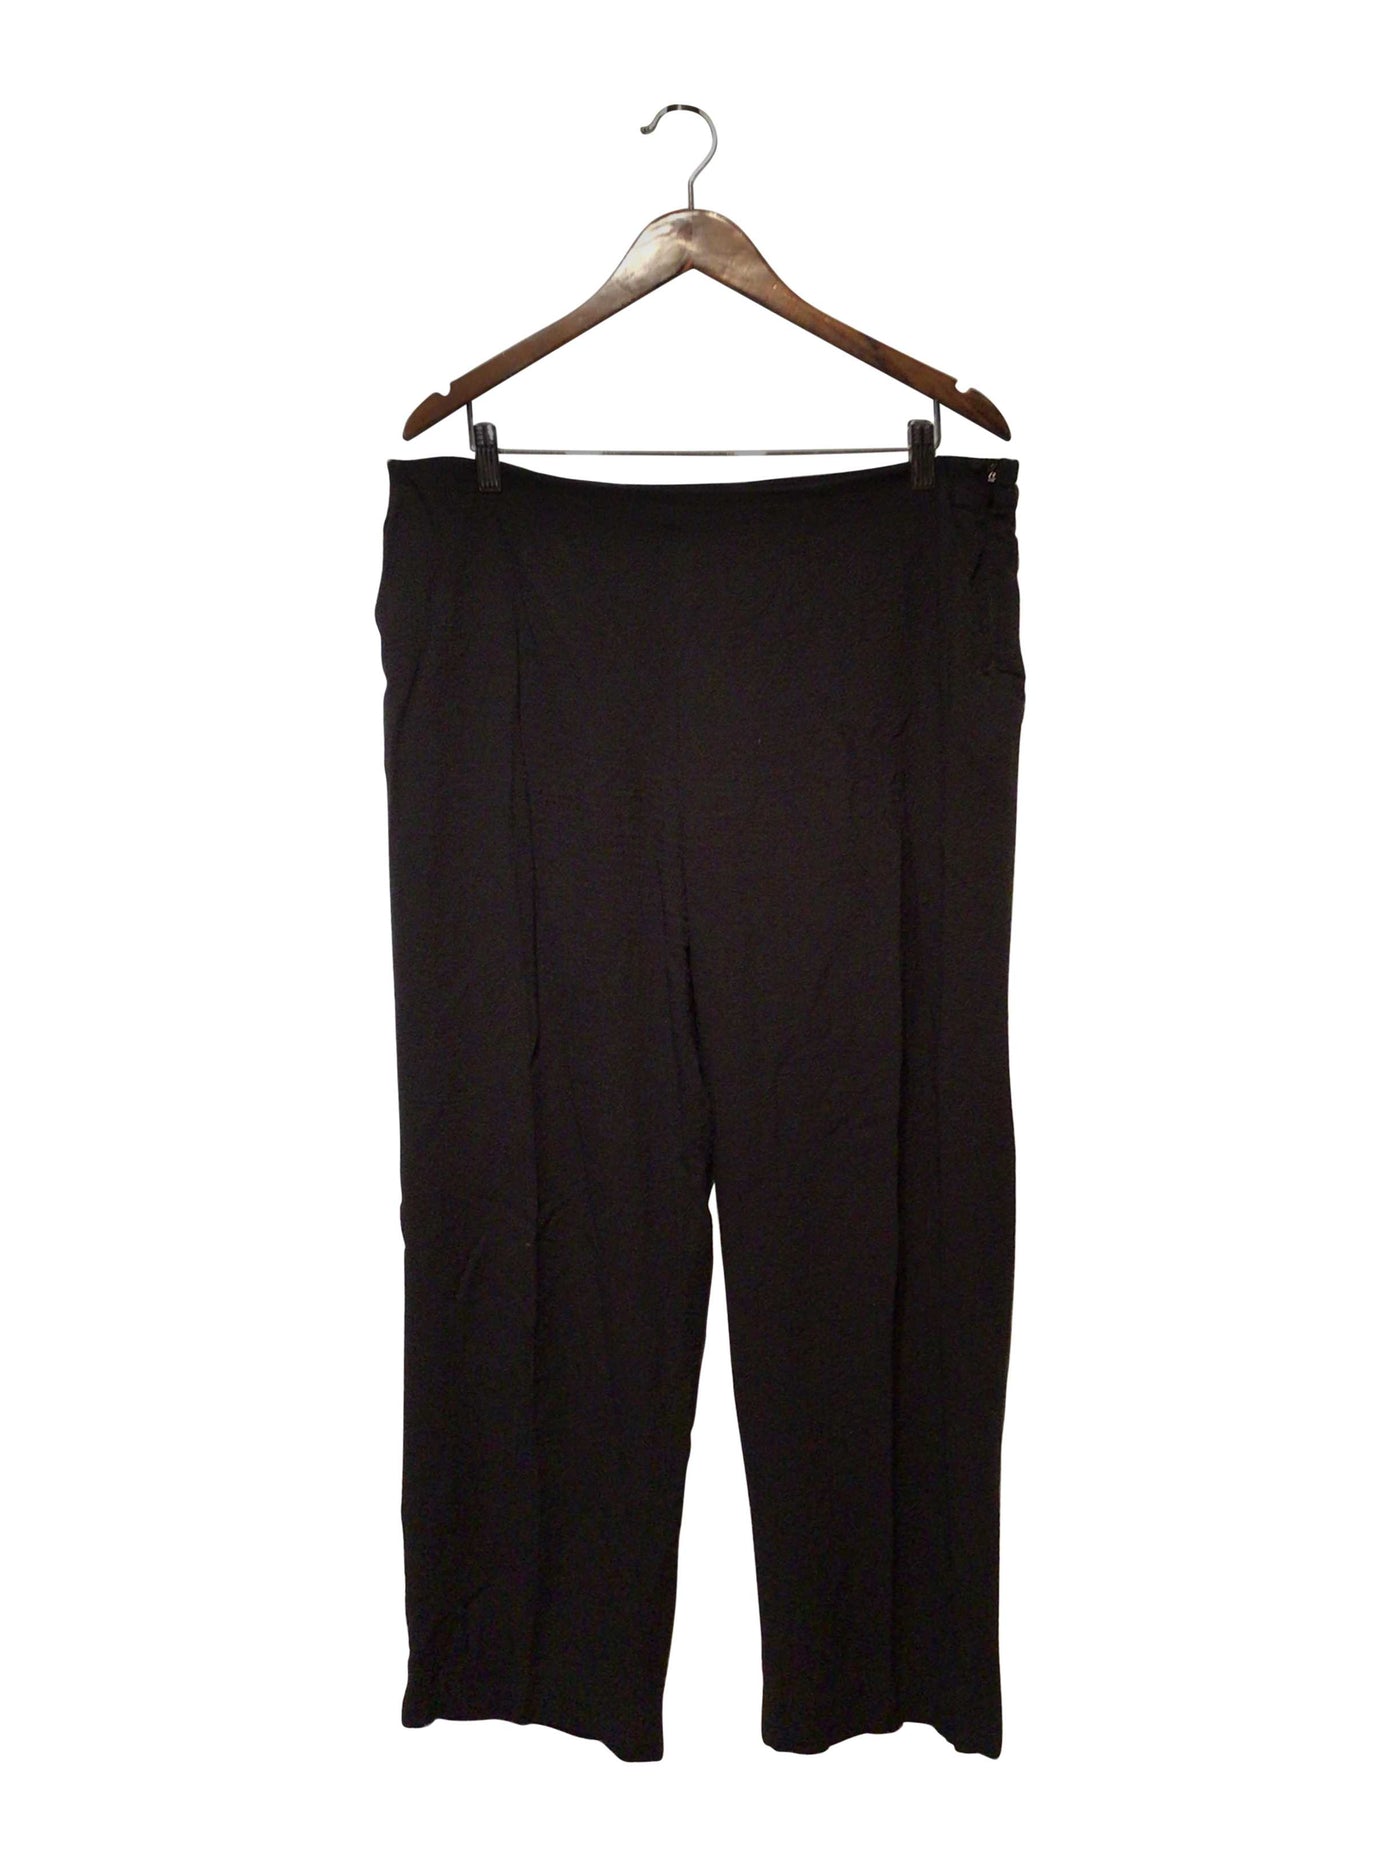 EX OFFICIO Regular fit Pant in Black  -  L  21.50 Koop